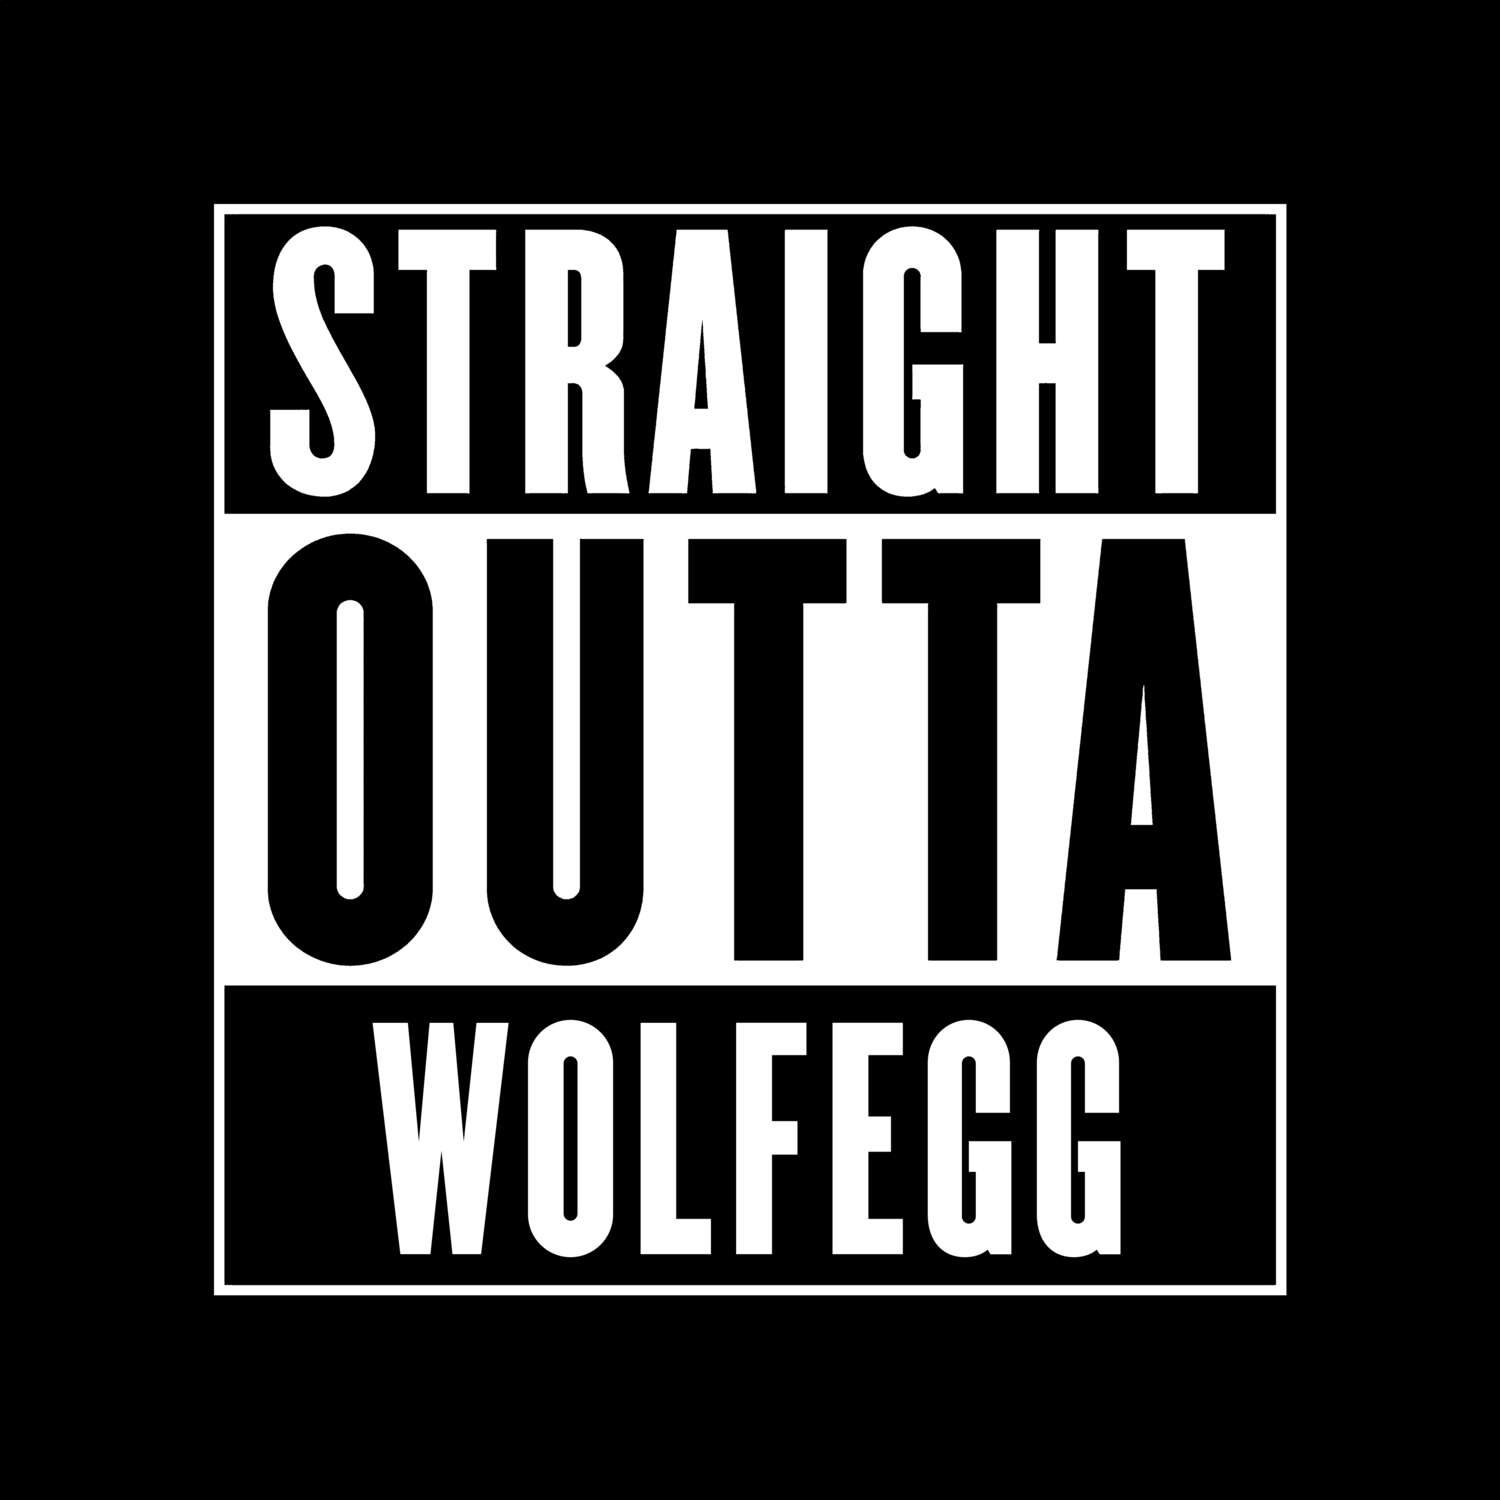 Wolfegg T-Shirt »Straight Outta«